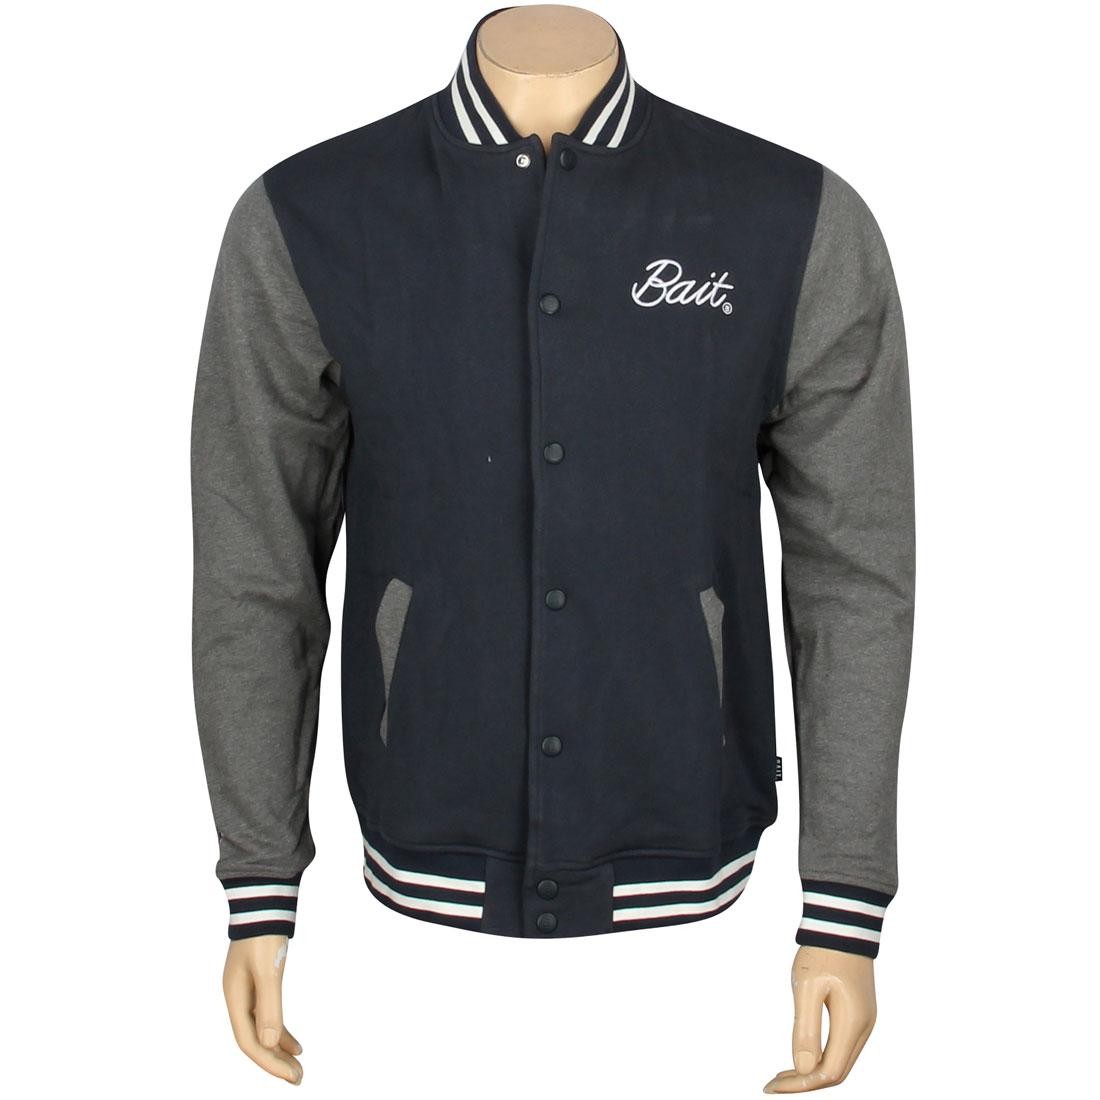 BAIT Basics Baseball Jacket (navy / grey)